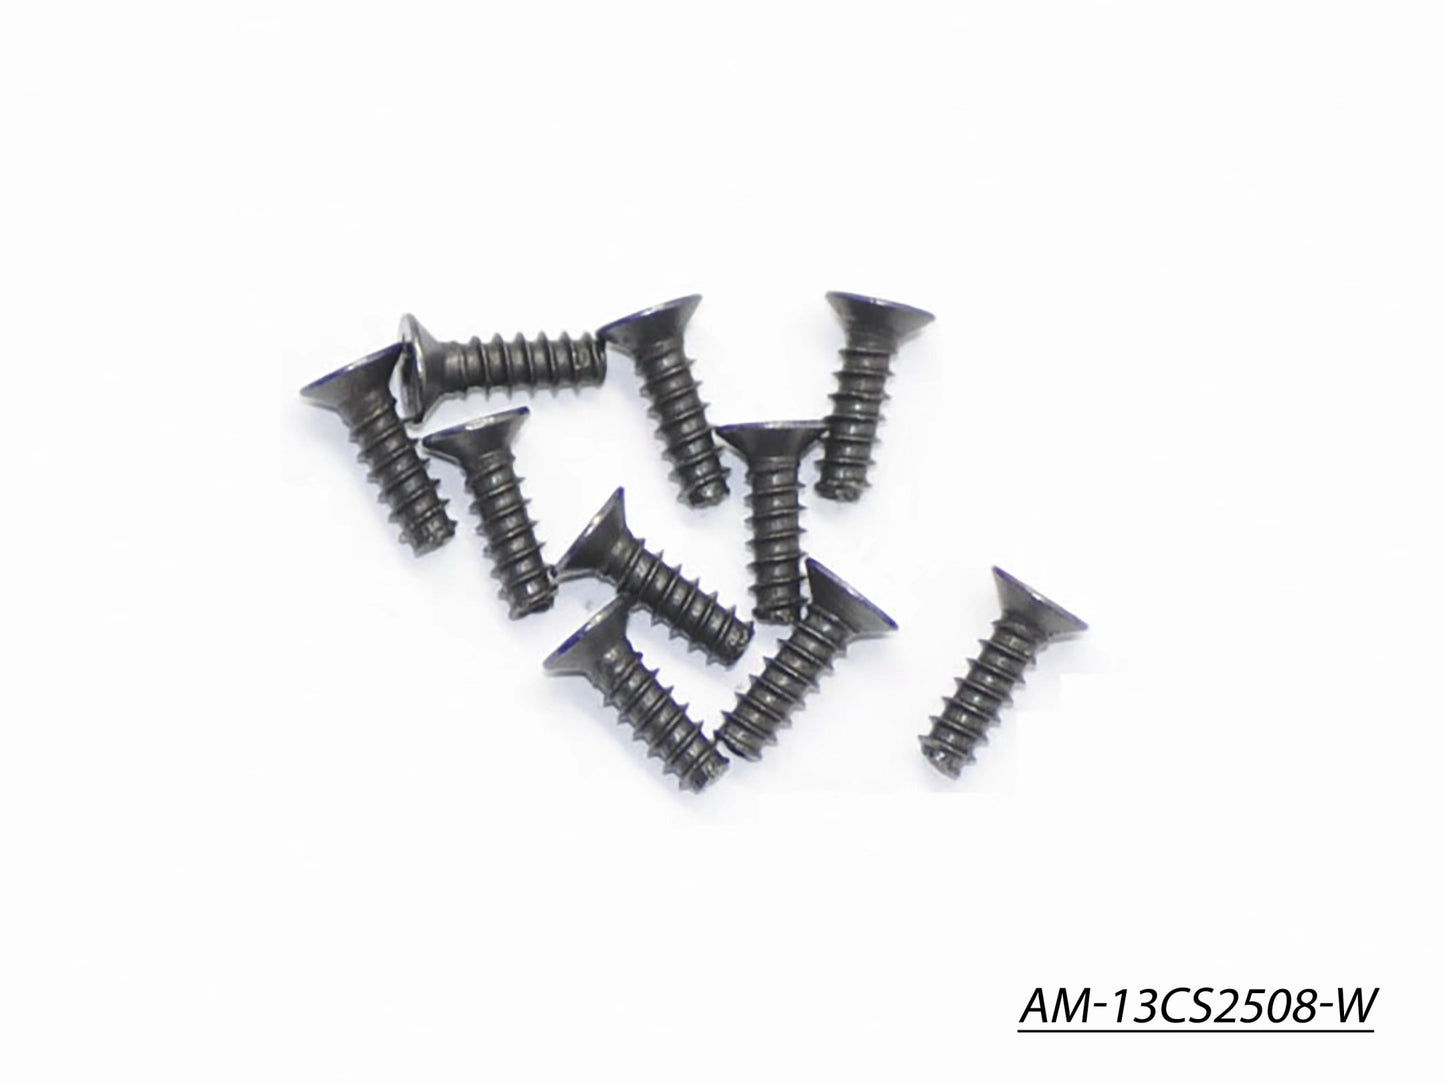 Screw Philipshead Countersunk Widethread M2.5X8 (10) (AM-13CS2508-W)